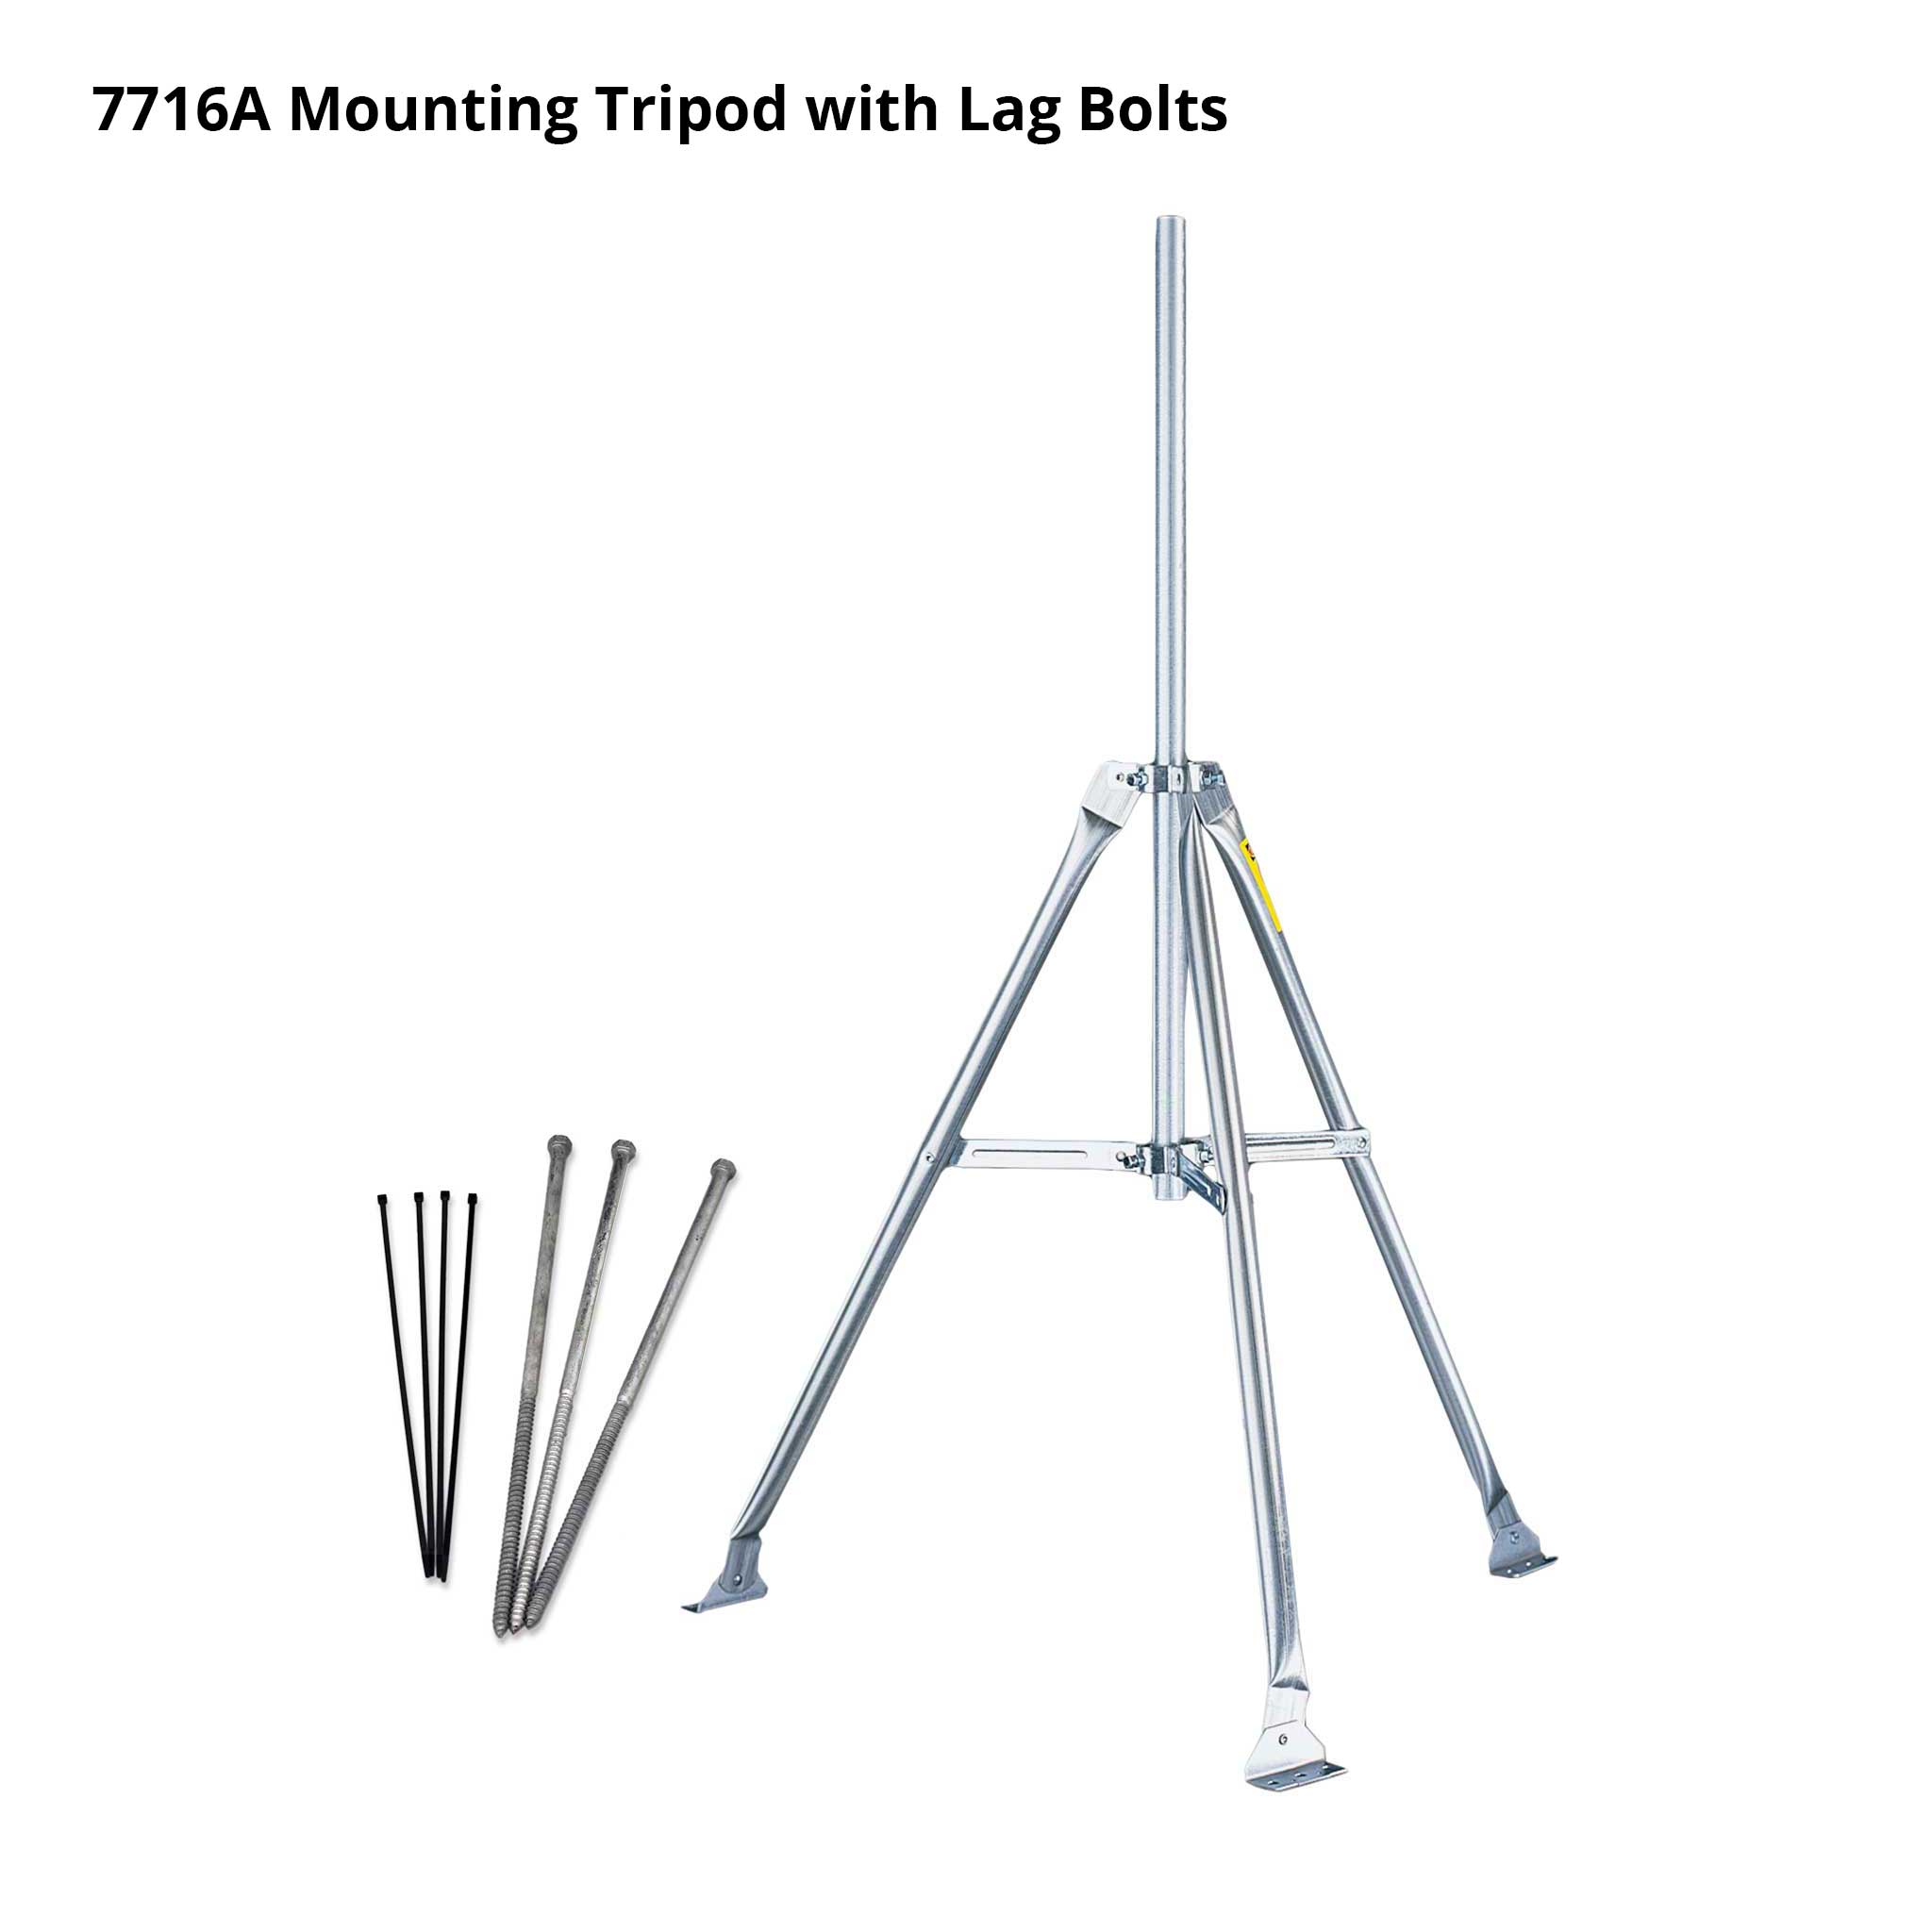 Mounting Tripod - SKU 7716, 7716A — Davis Instruments